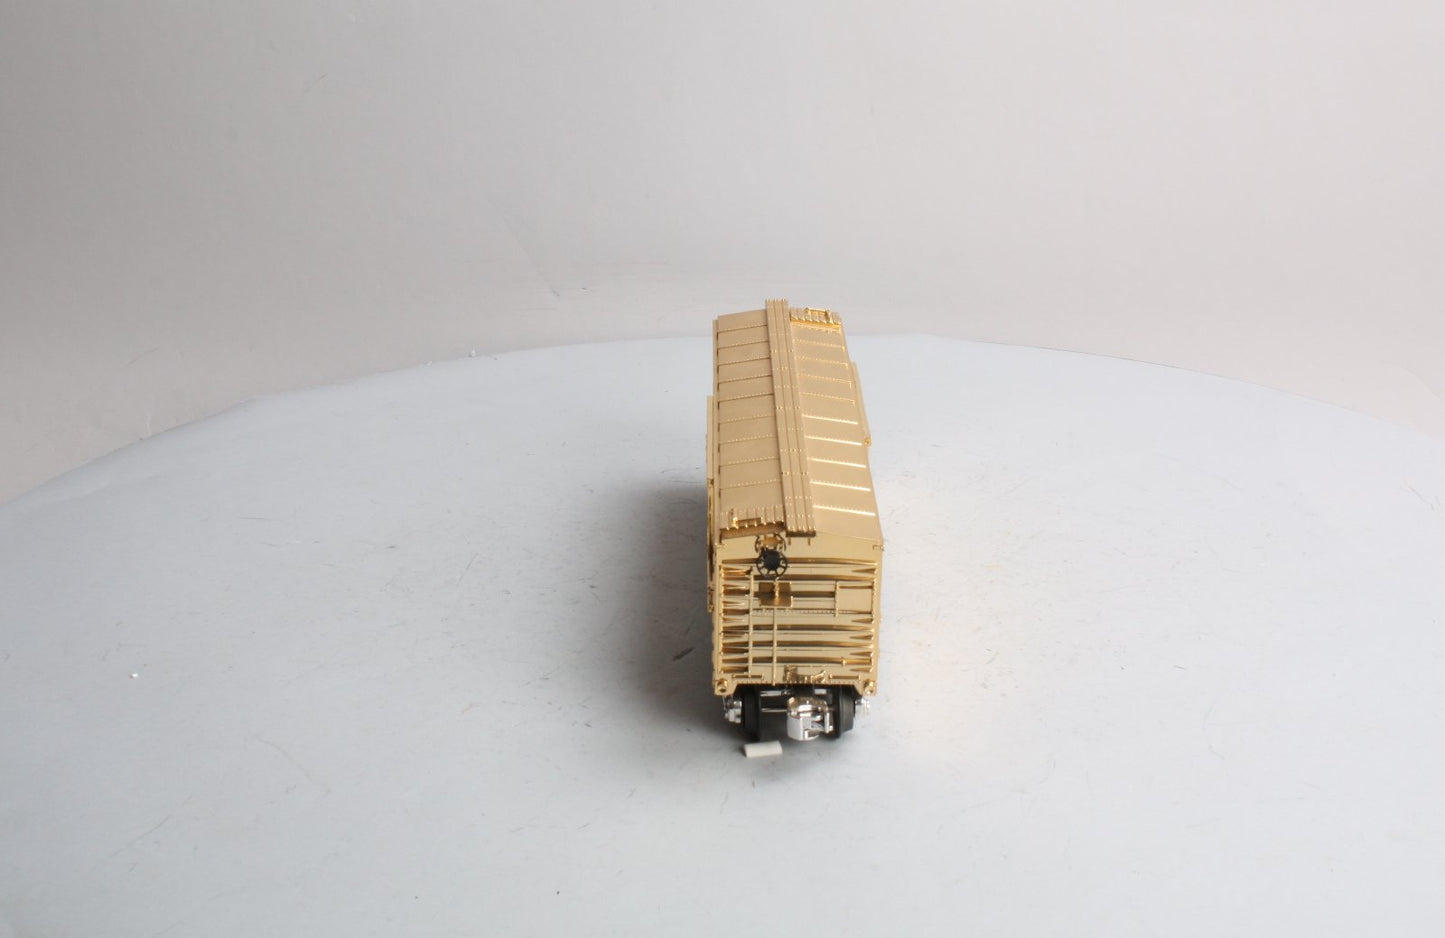 MTH 30-7446 O Gauge Gold Plated Pennsylvania Boxcar #28649 LN/Box